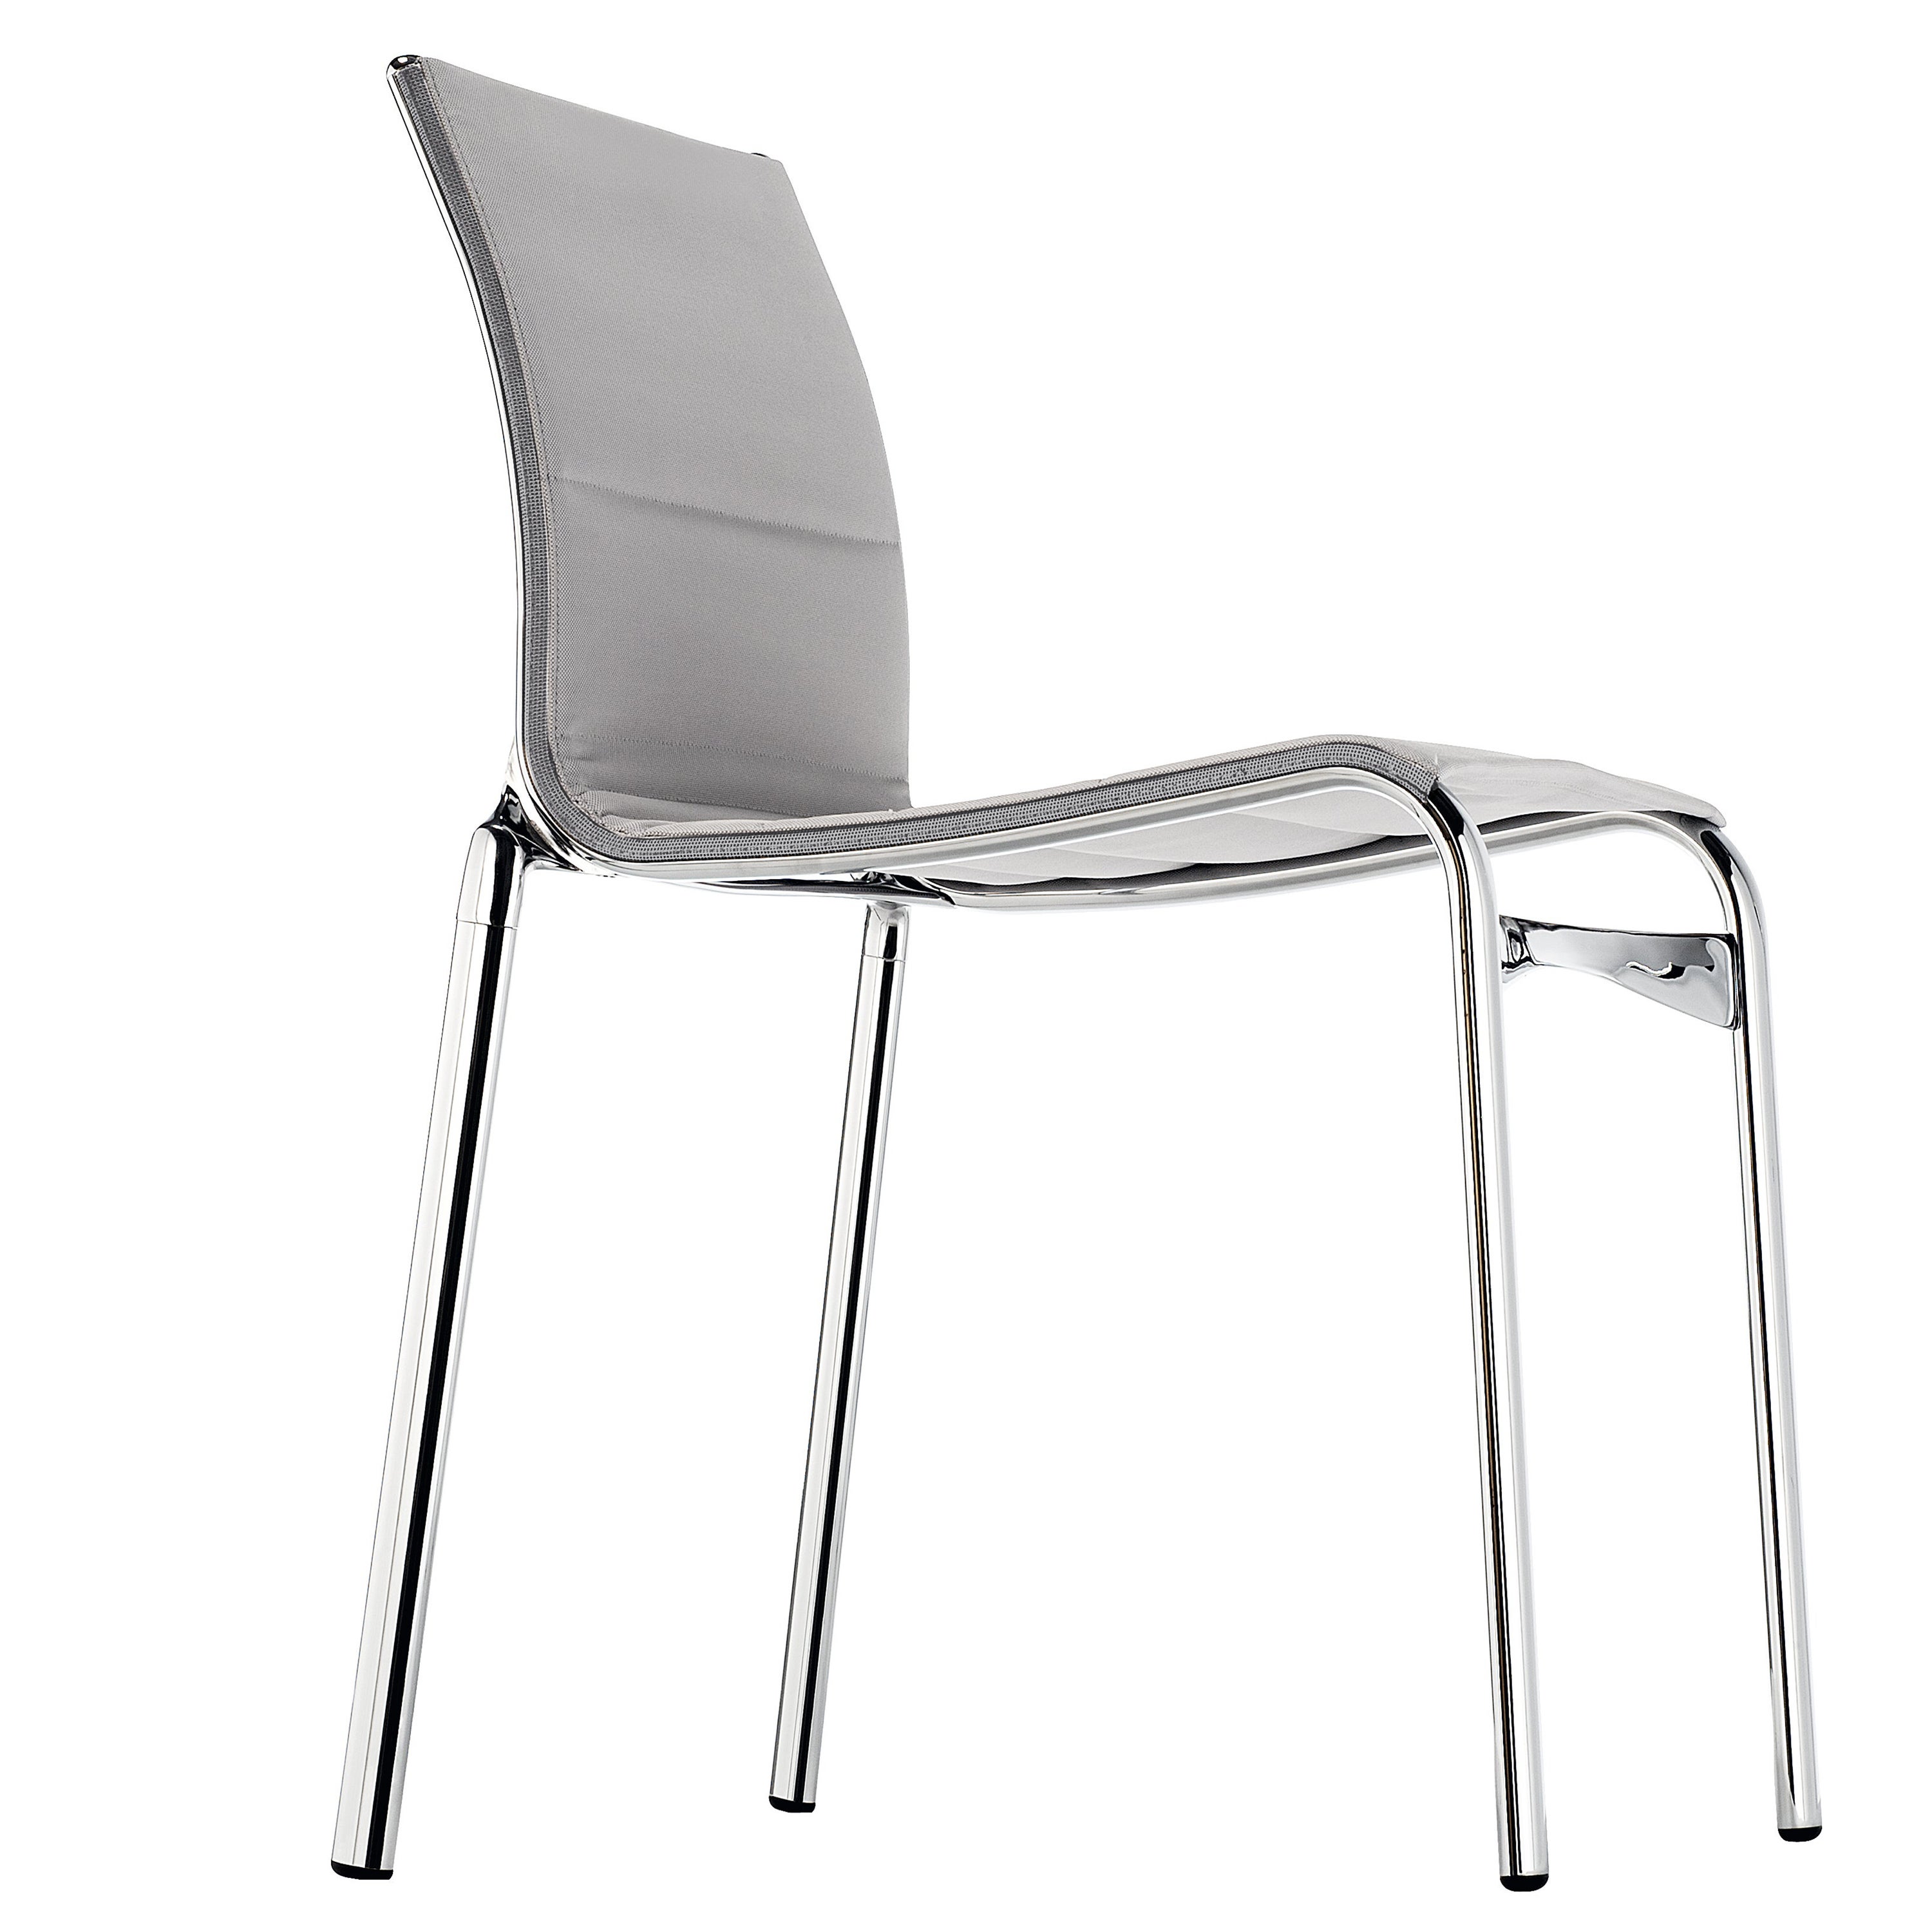 Alias Highframe 40 Stuhl mit grauem gepolstertem Sitz und verchromtem Aluminiumgestell